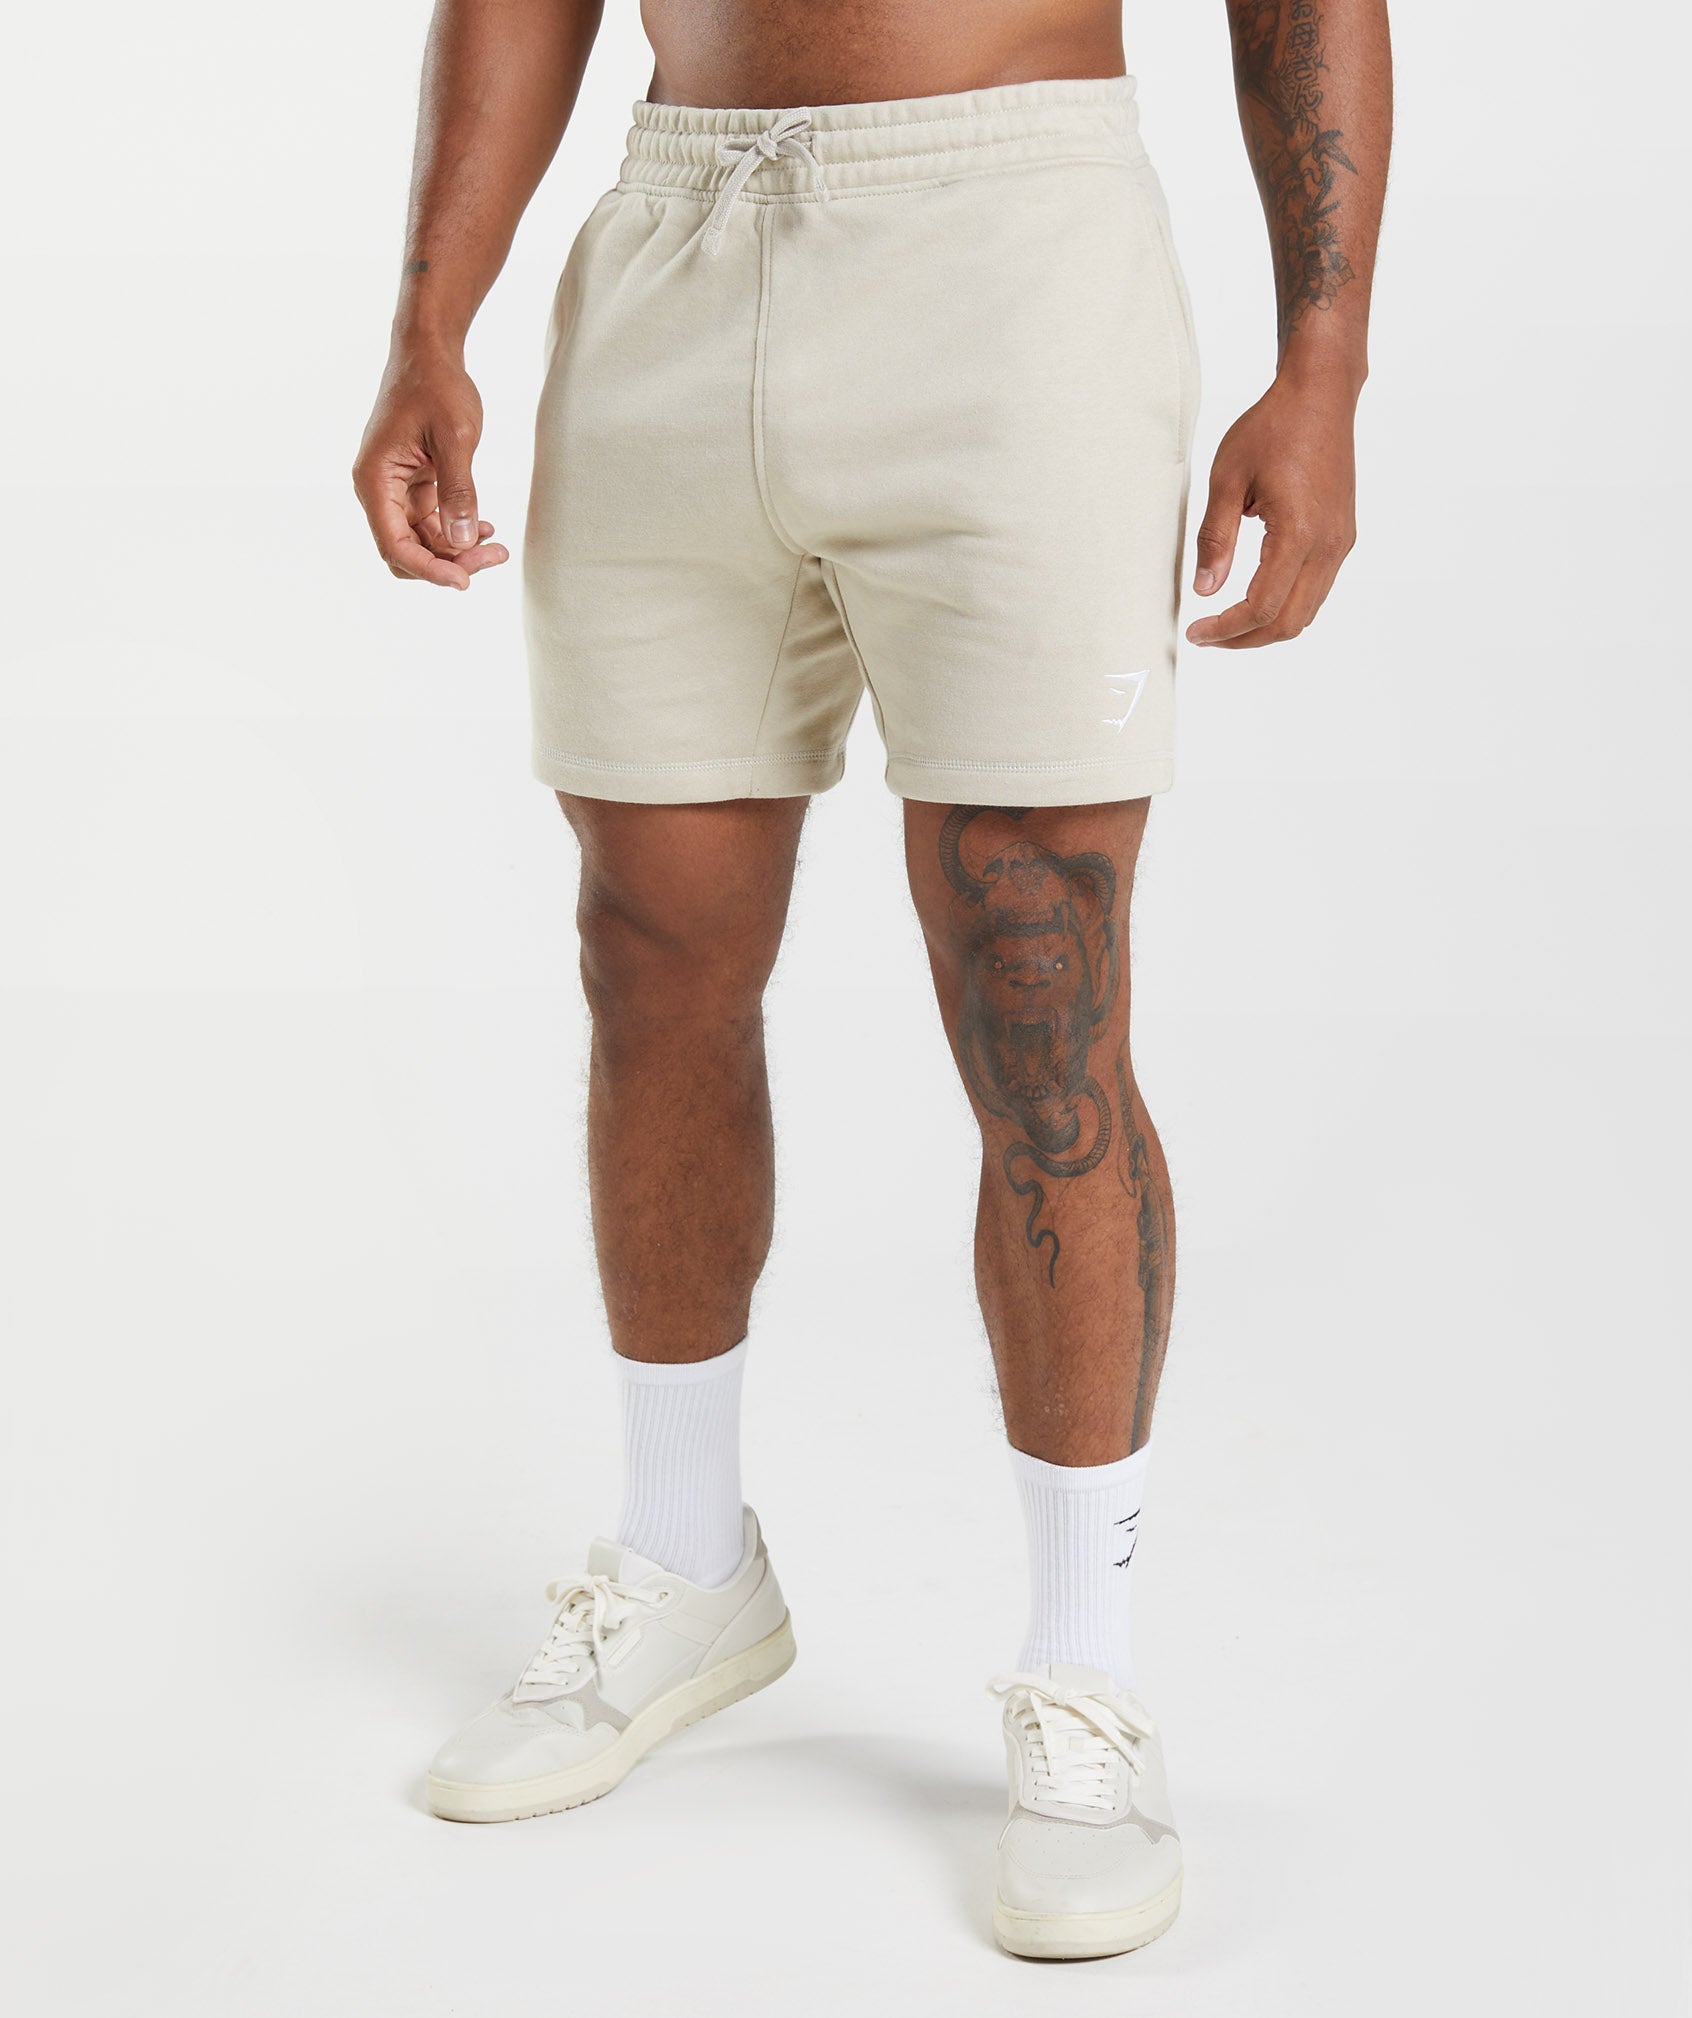 Men's Sweat Shorts & Jersey Shorts - Gymshark